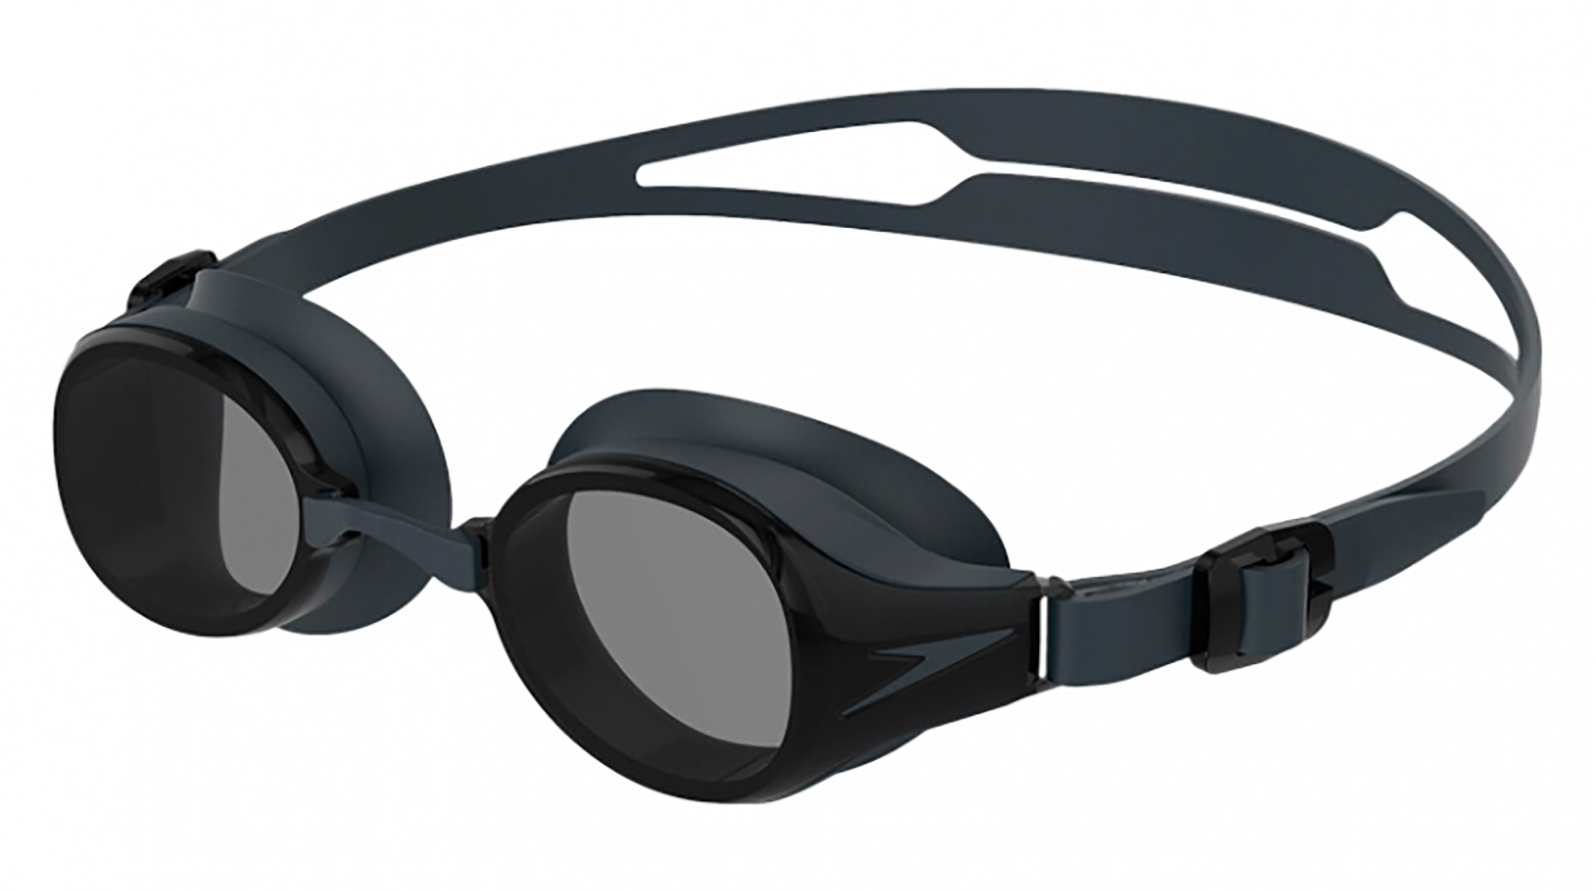 Speedo Очки для плавания Hydropure Optical F808 -3,0 speedo очки для плавания hydropure optical f809 5 5